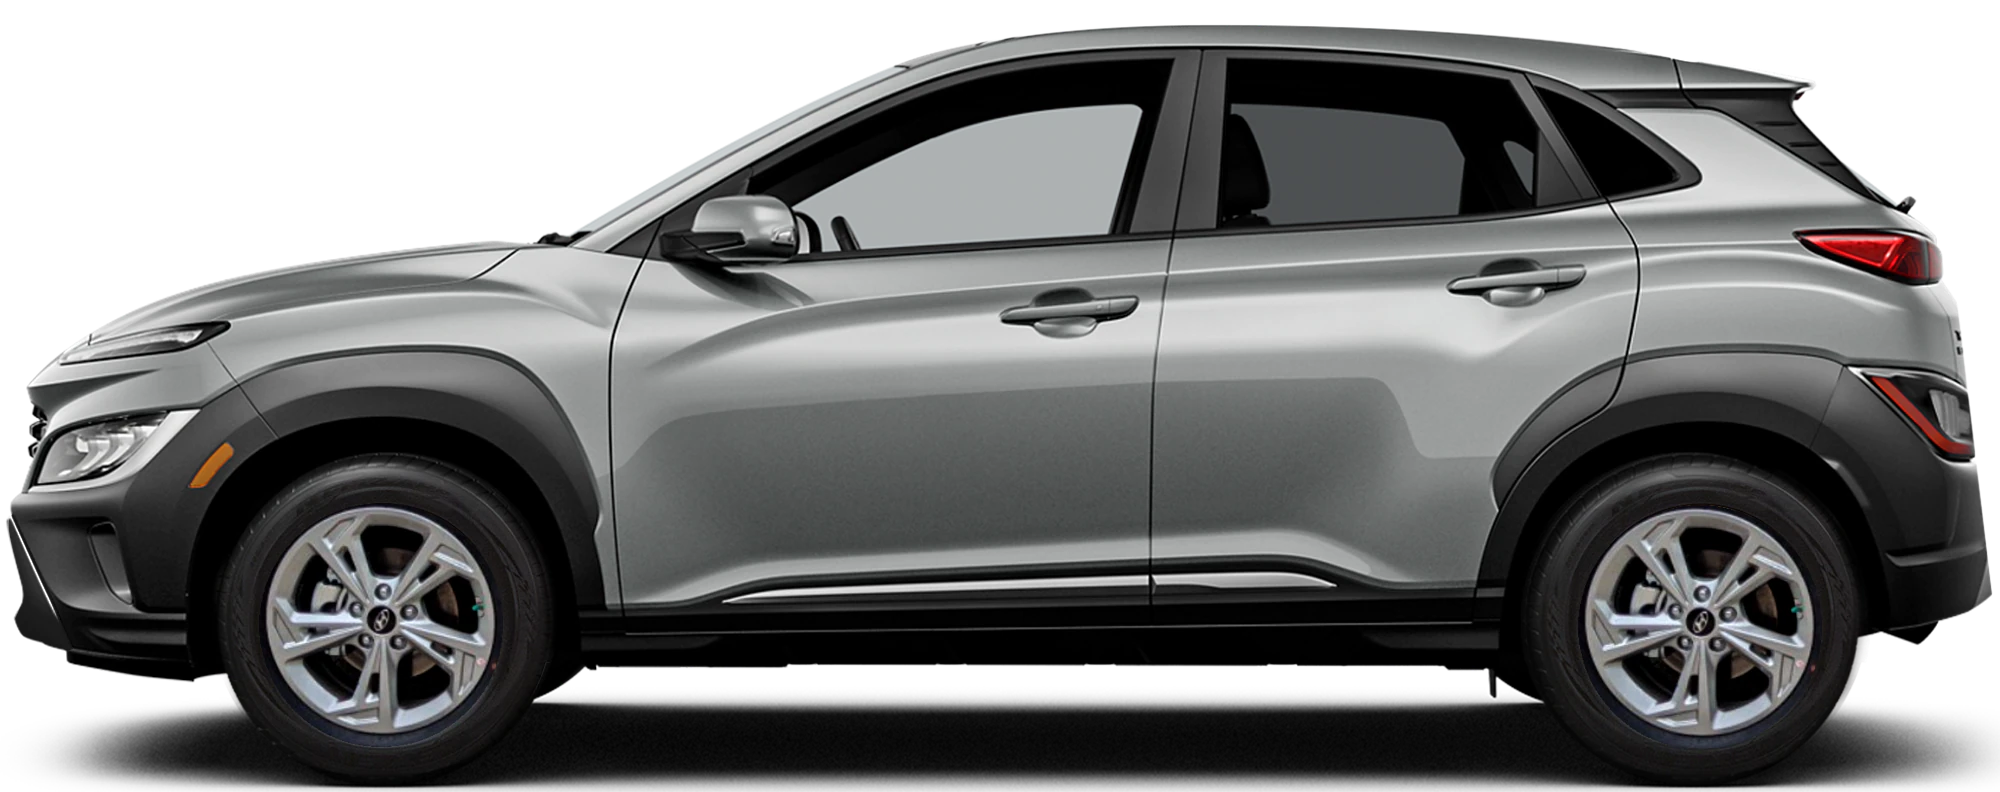 Hyundai Kona exterior - Side Profile